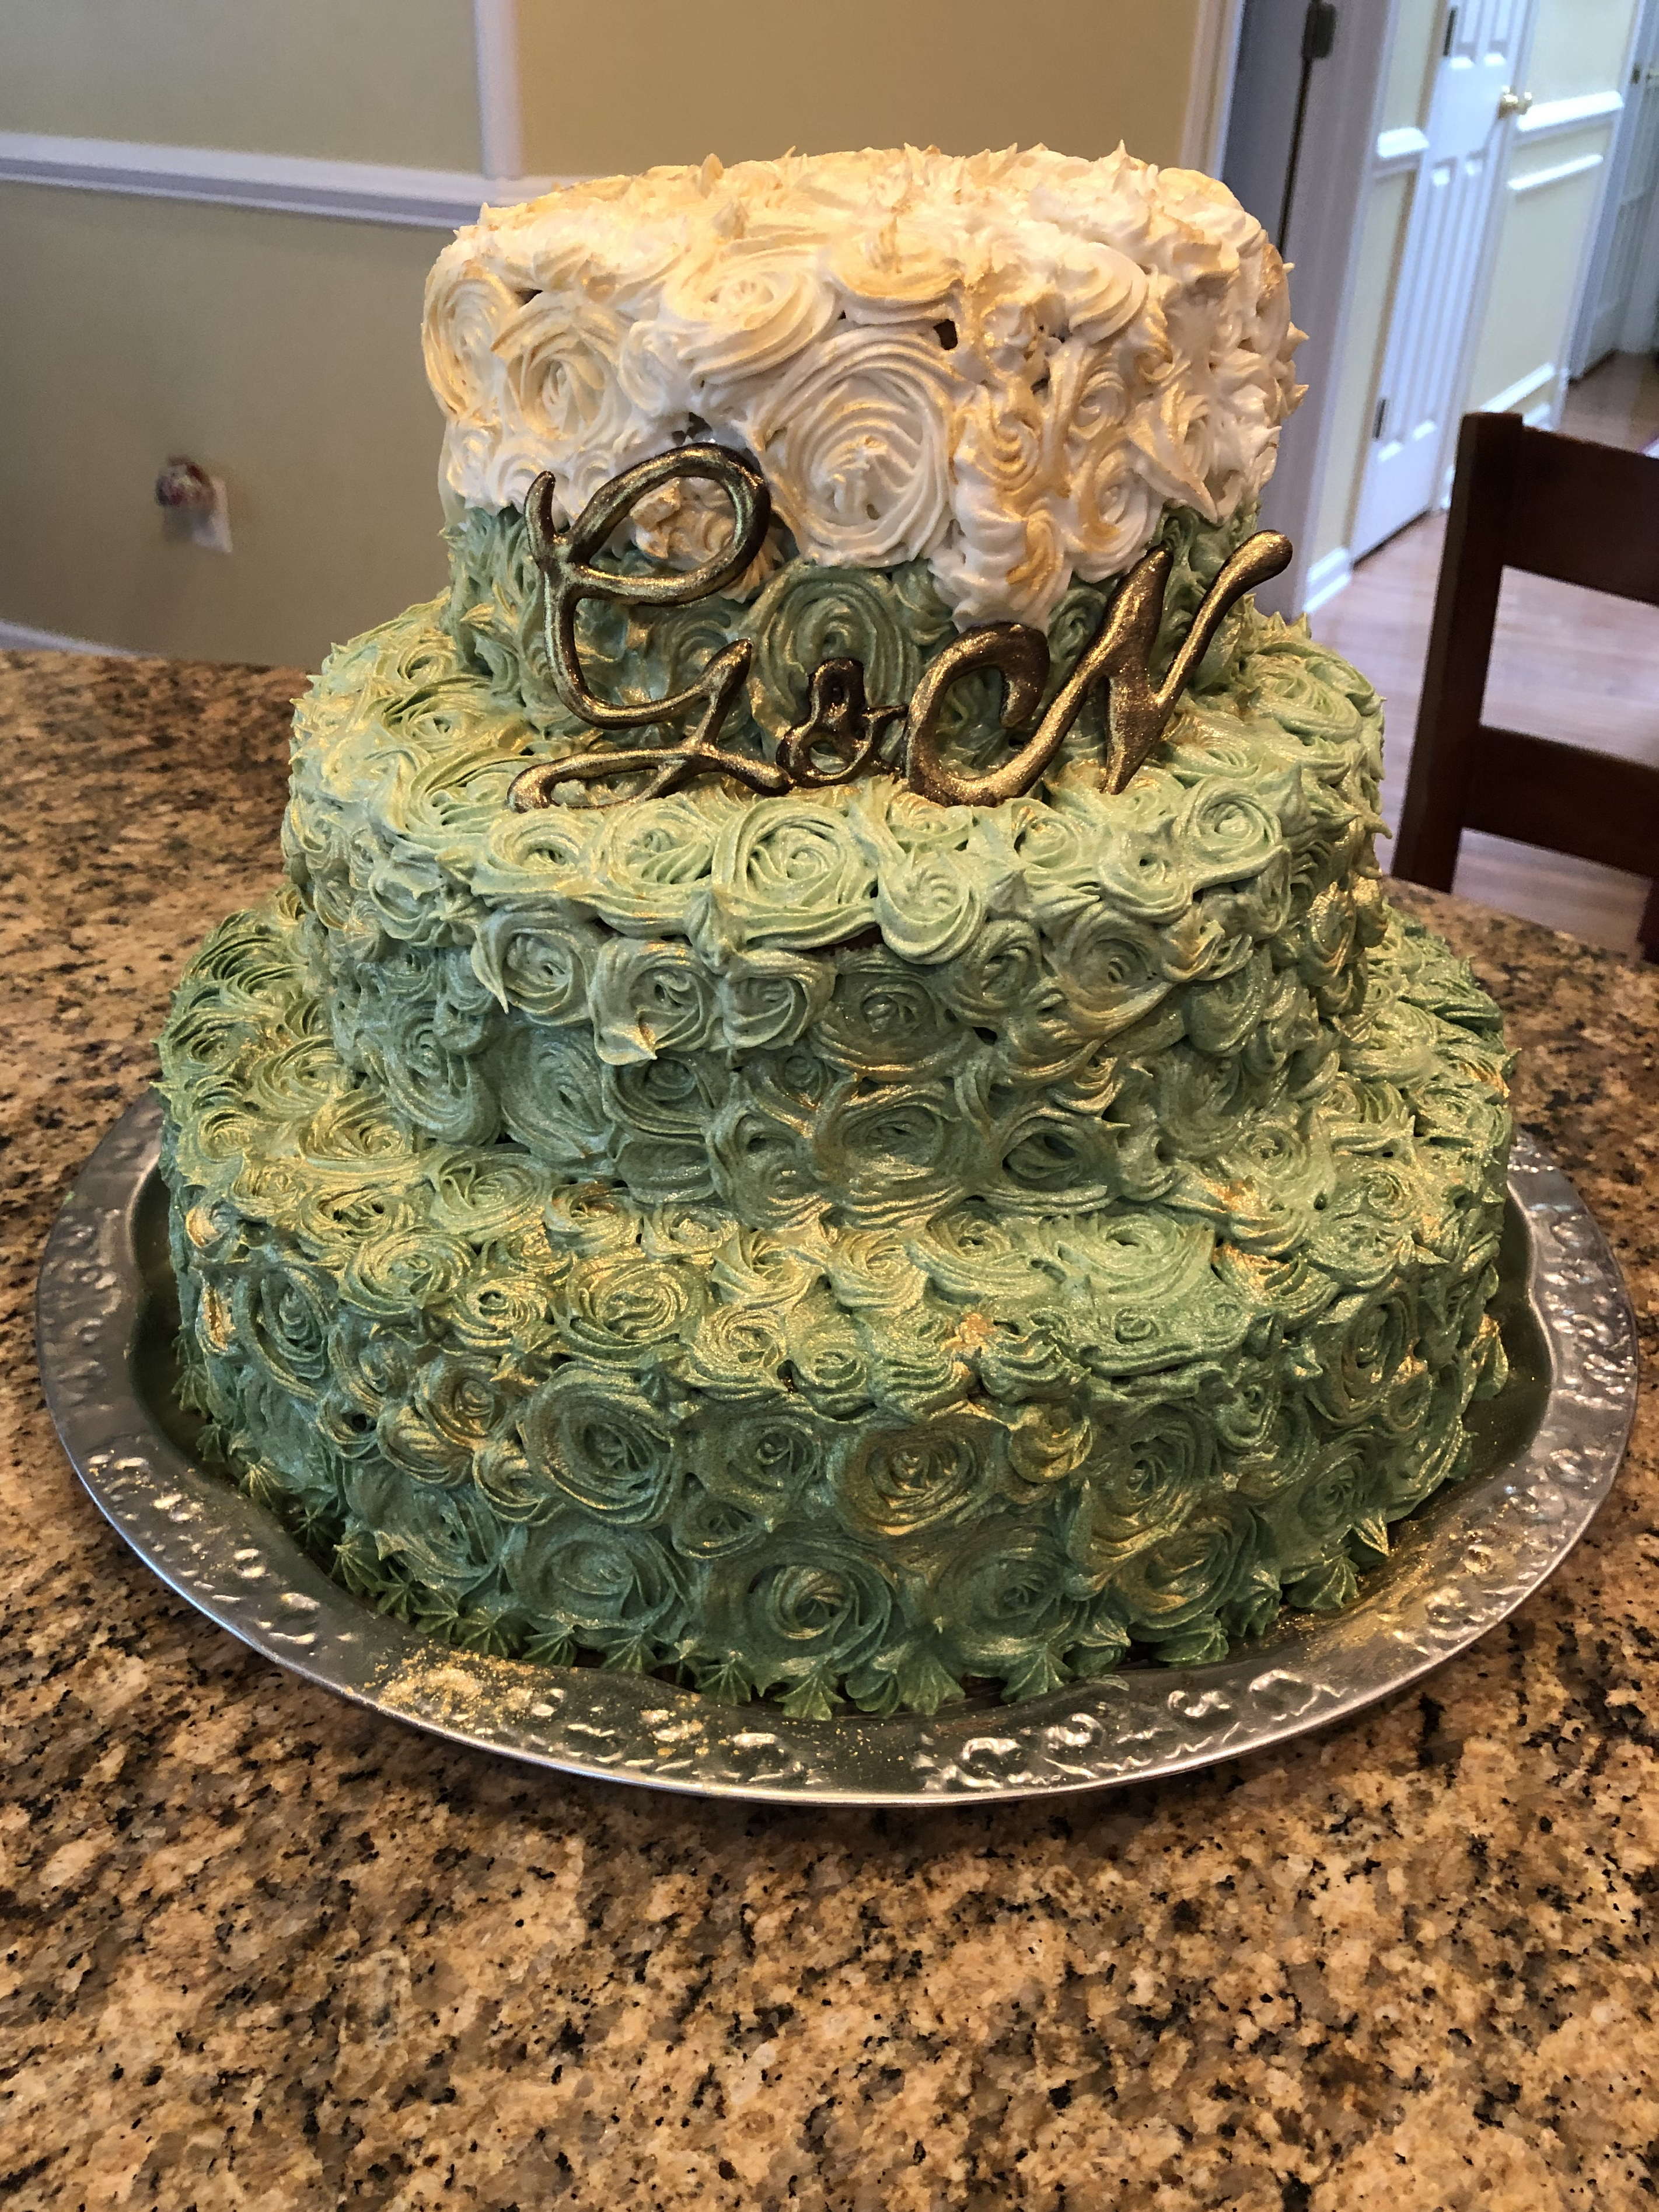 marbel engaged cake | Wedding cake decorations, Cake, Simple cake designs